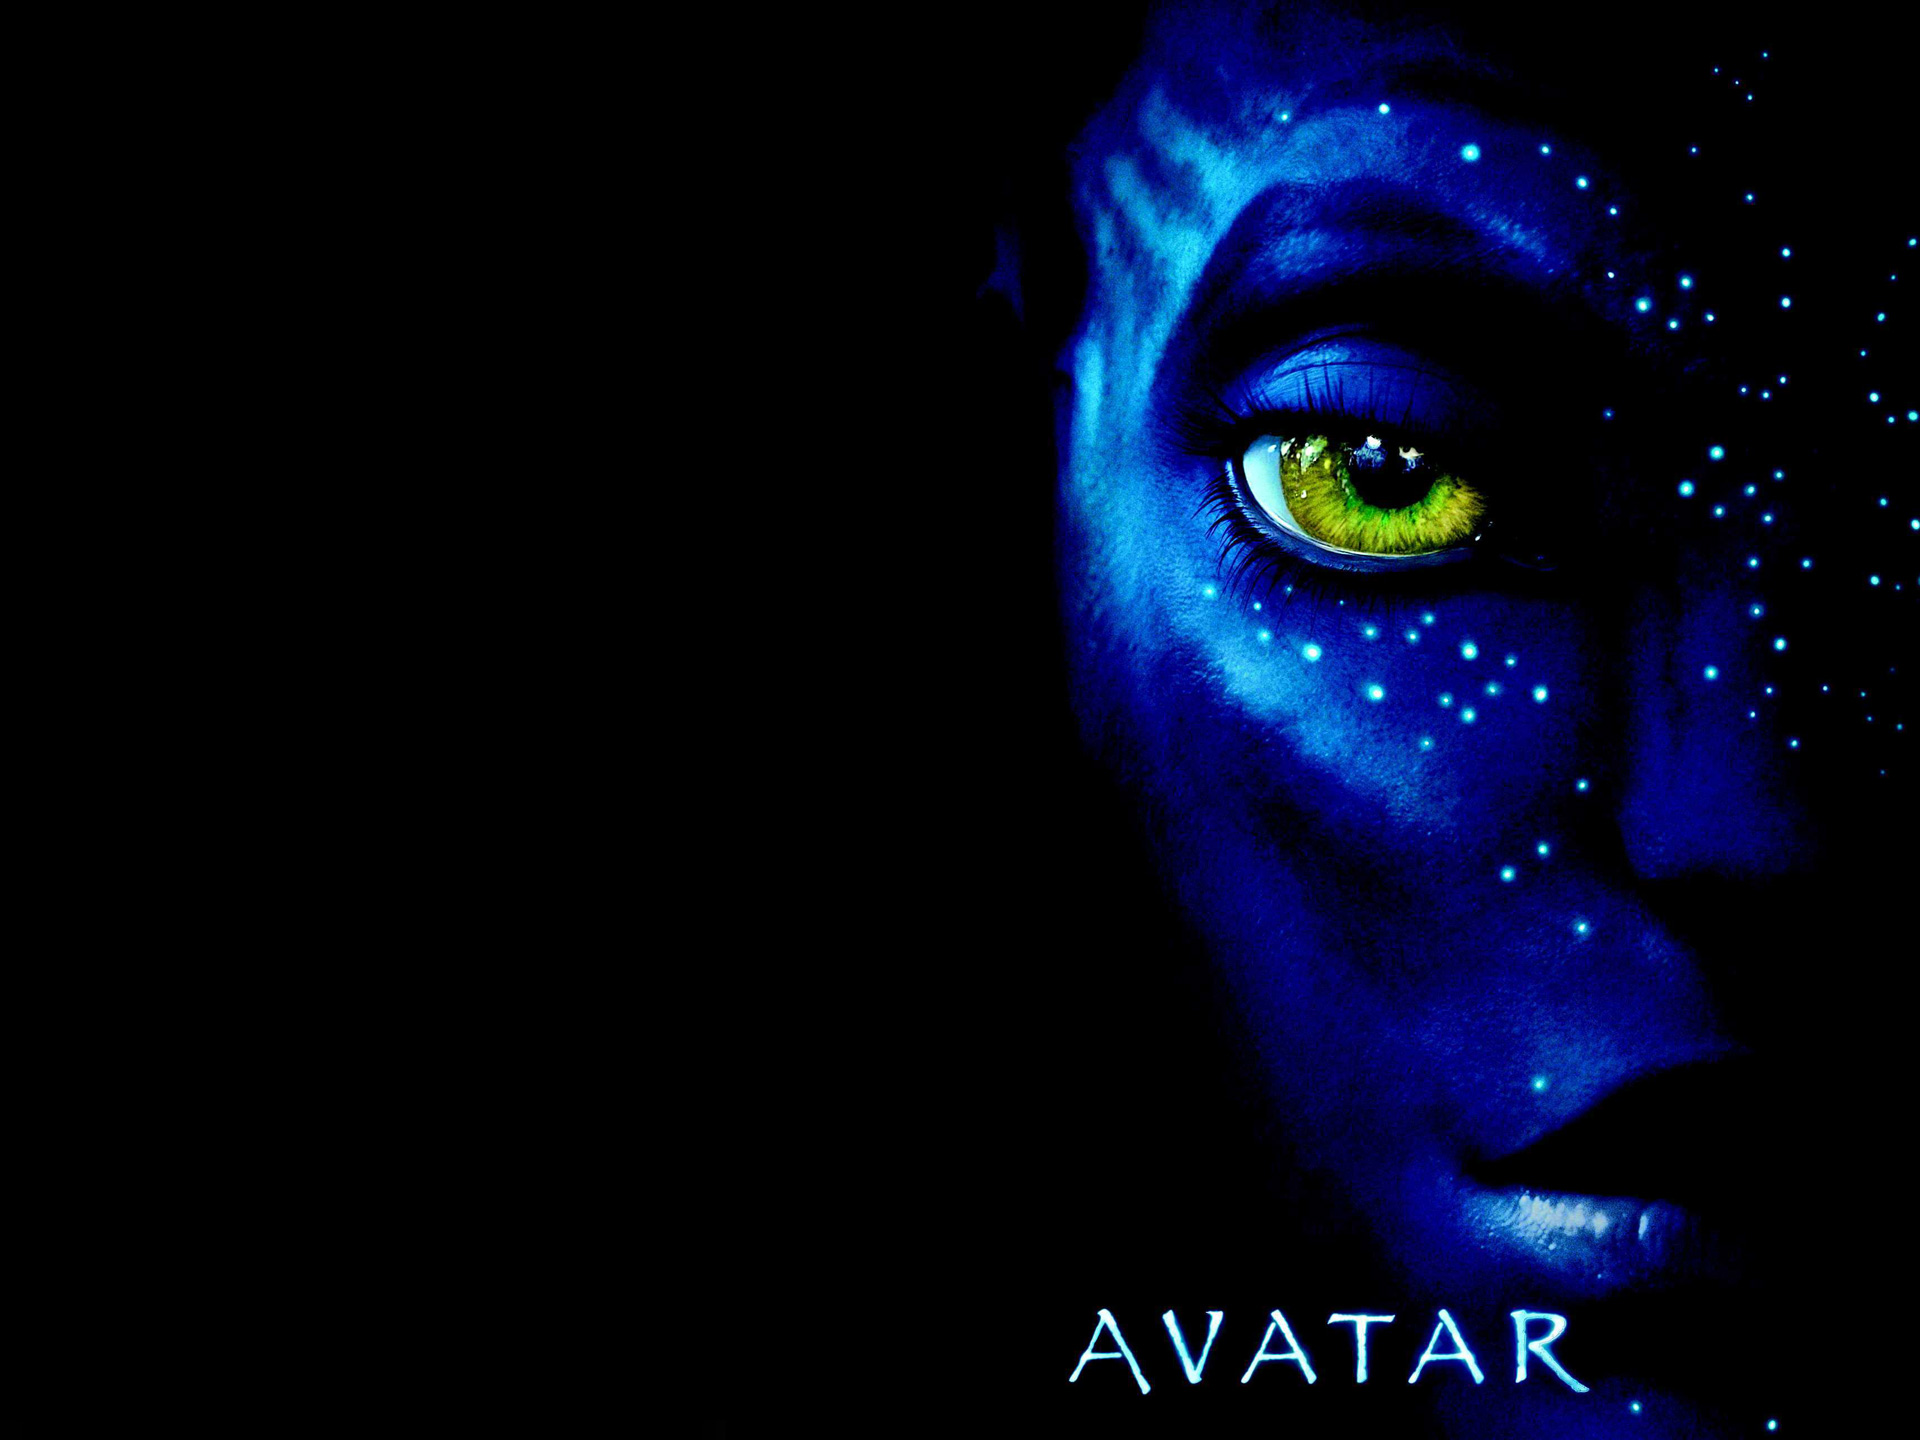 avatar movie wallpaper free download #7